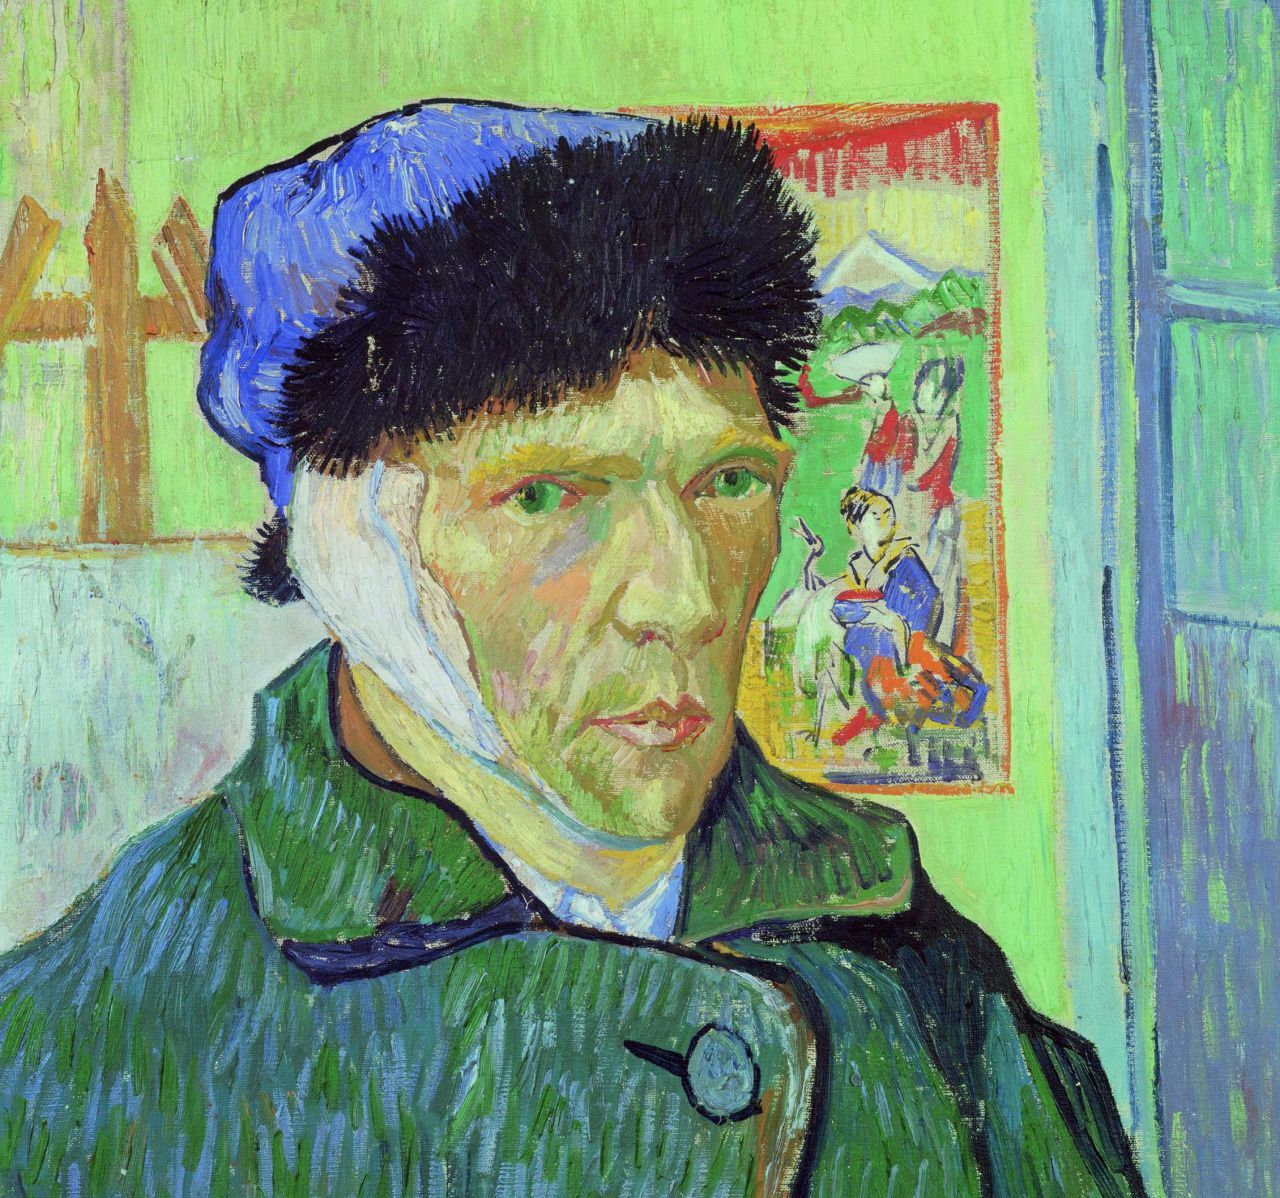 Van Gogh, la fièvre de peindre